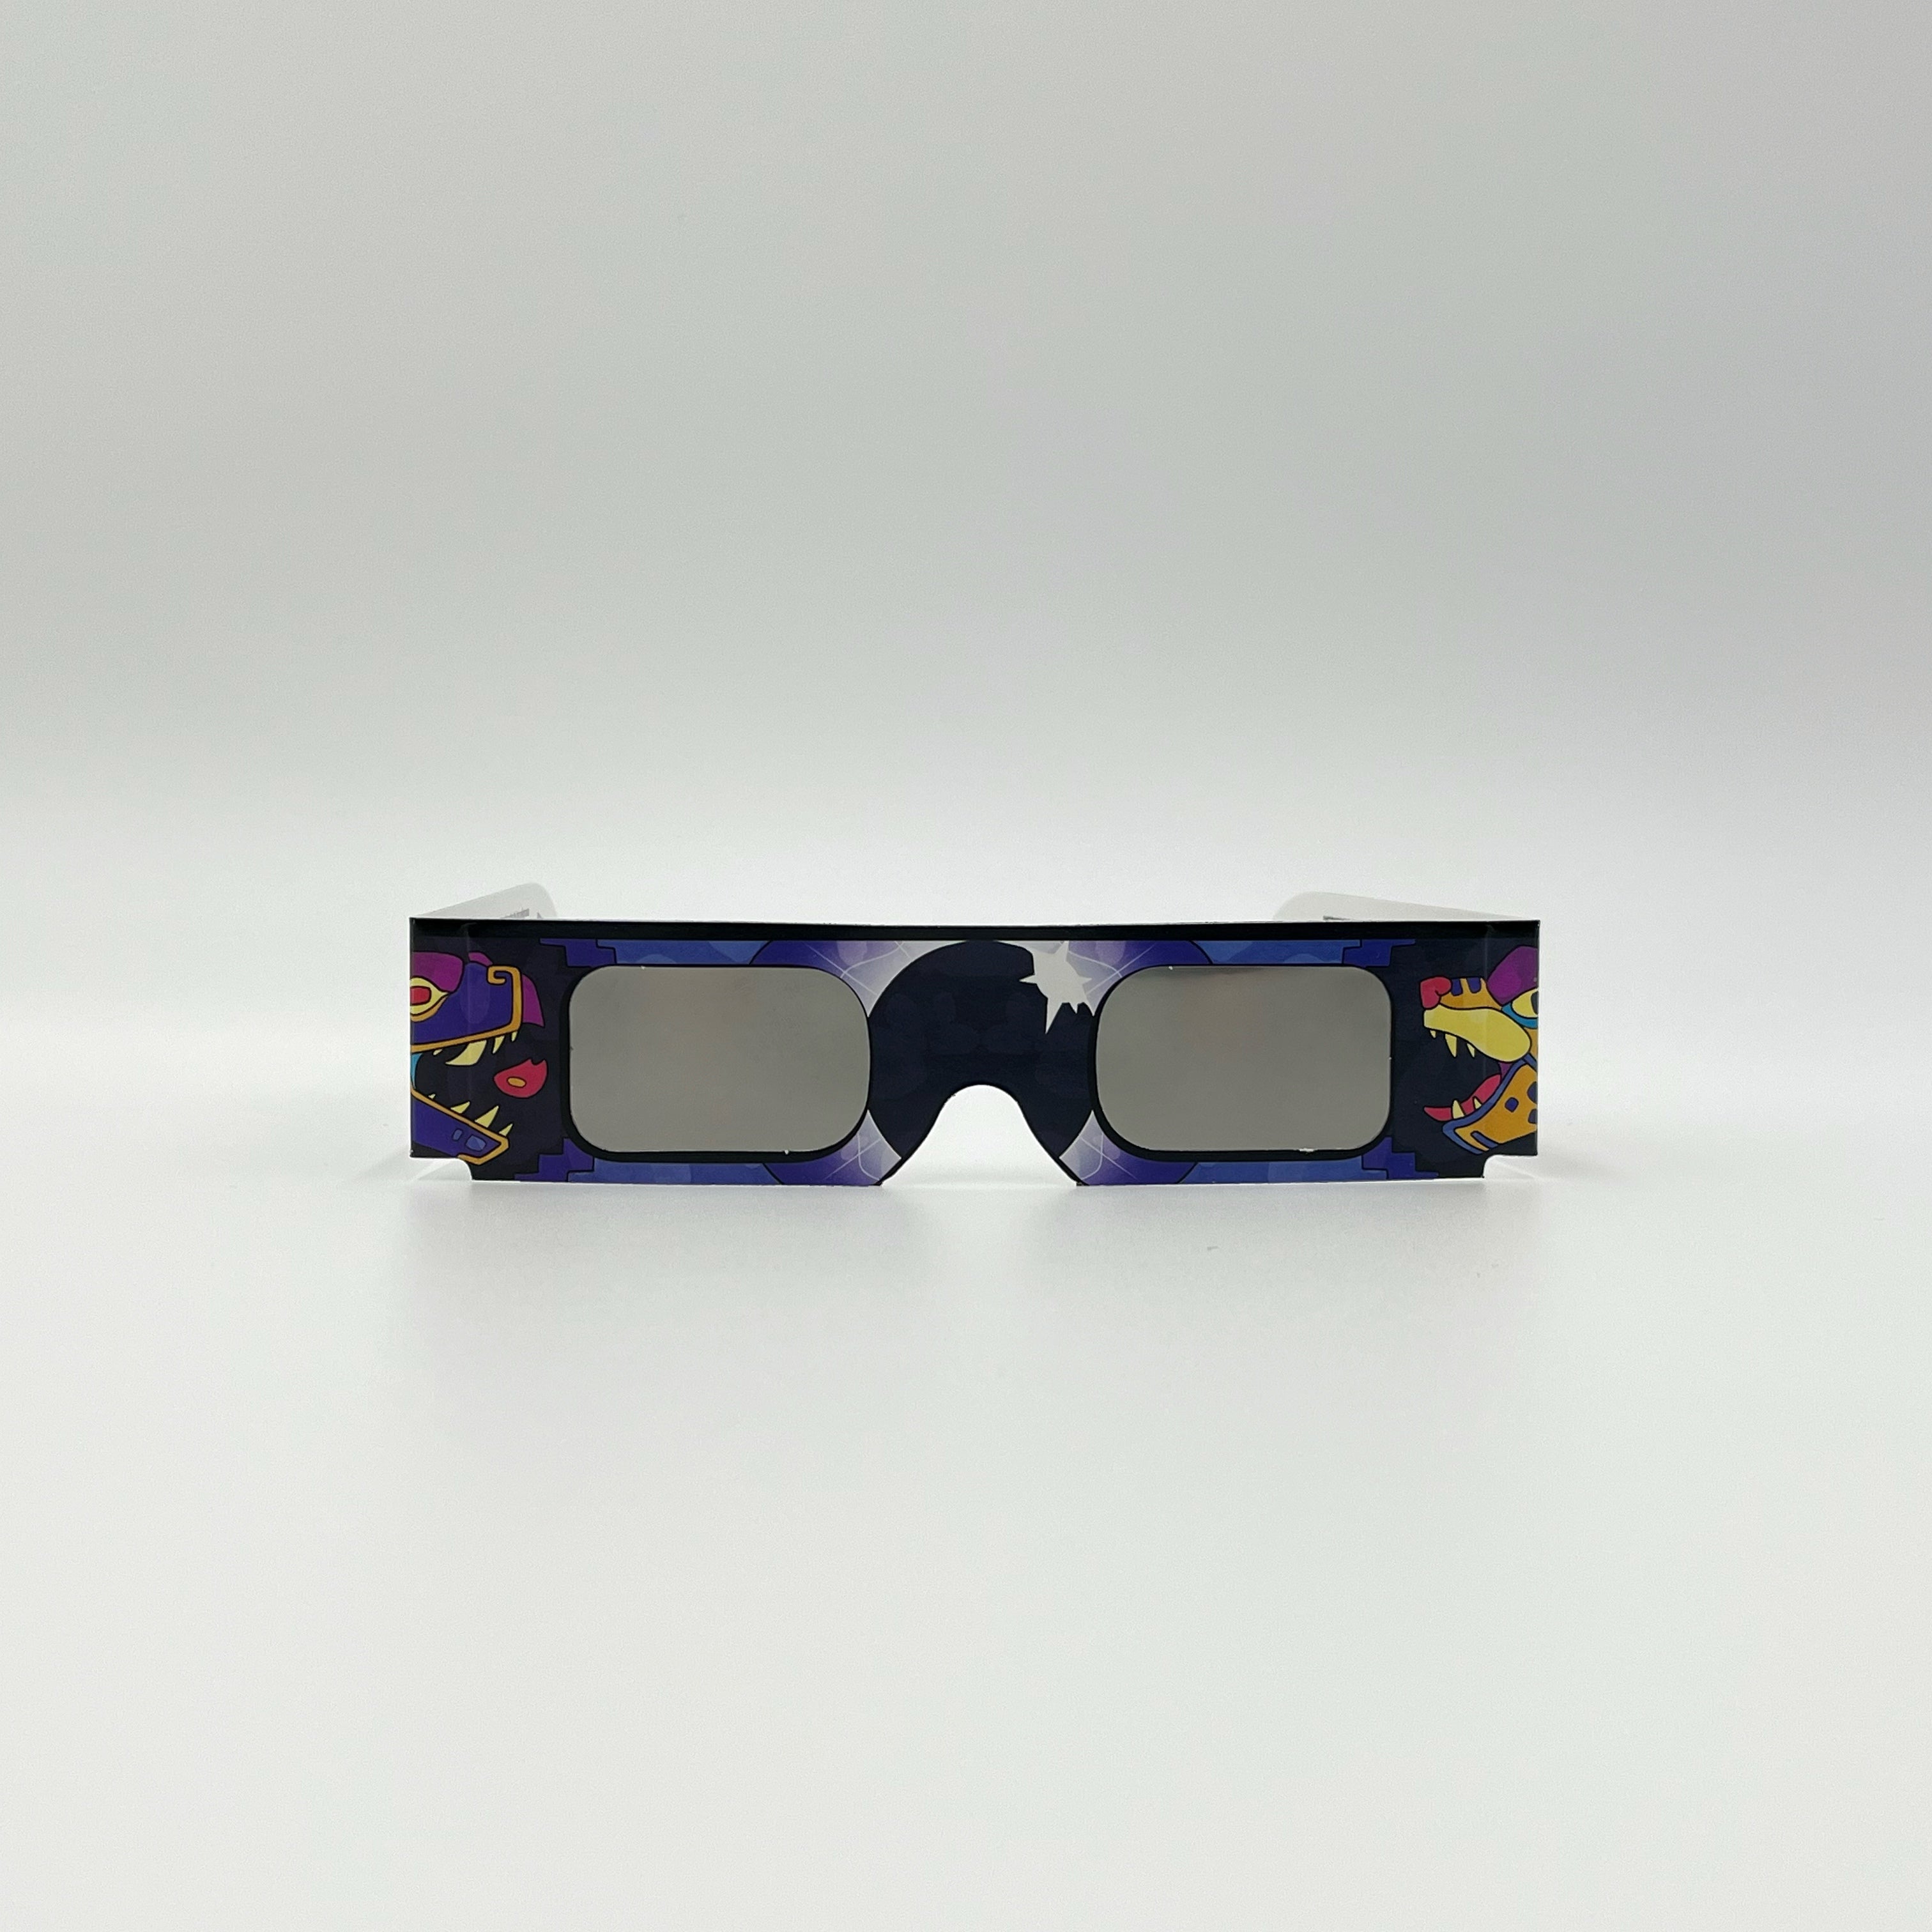 HMNS Paper Solar Eclipse Glasses- All Sales Final